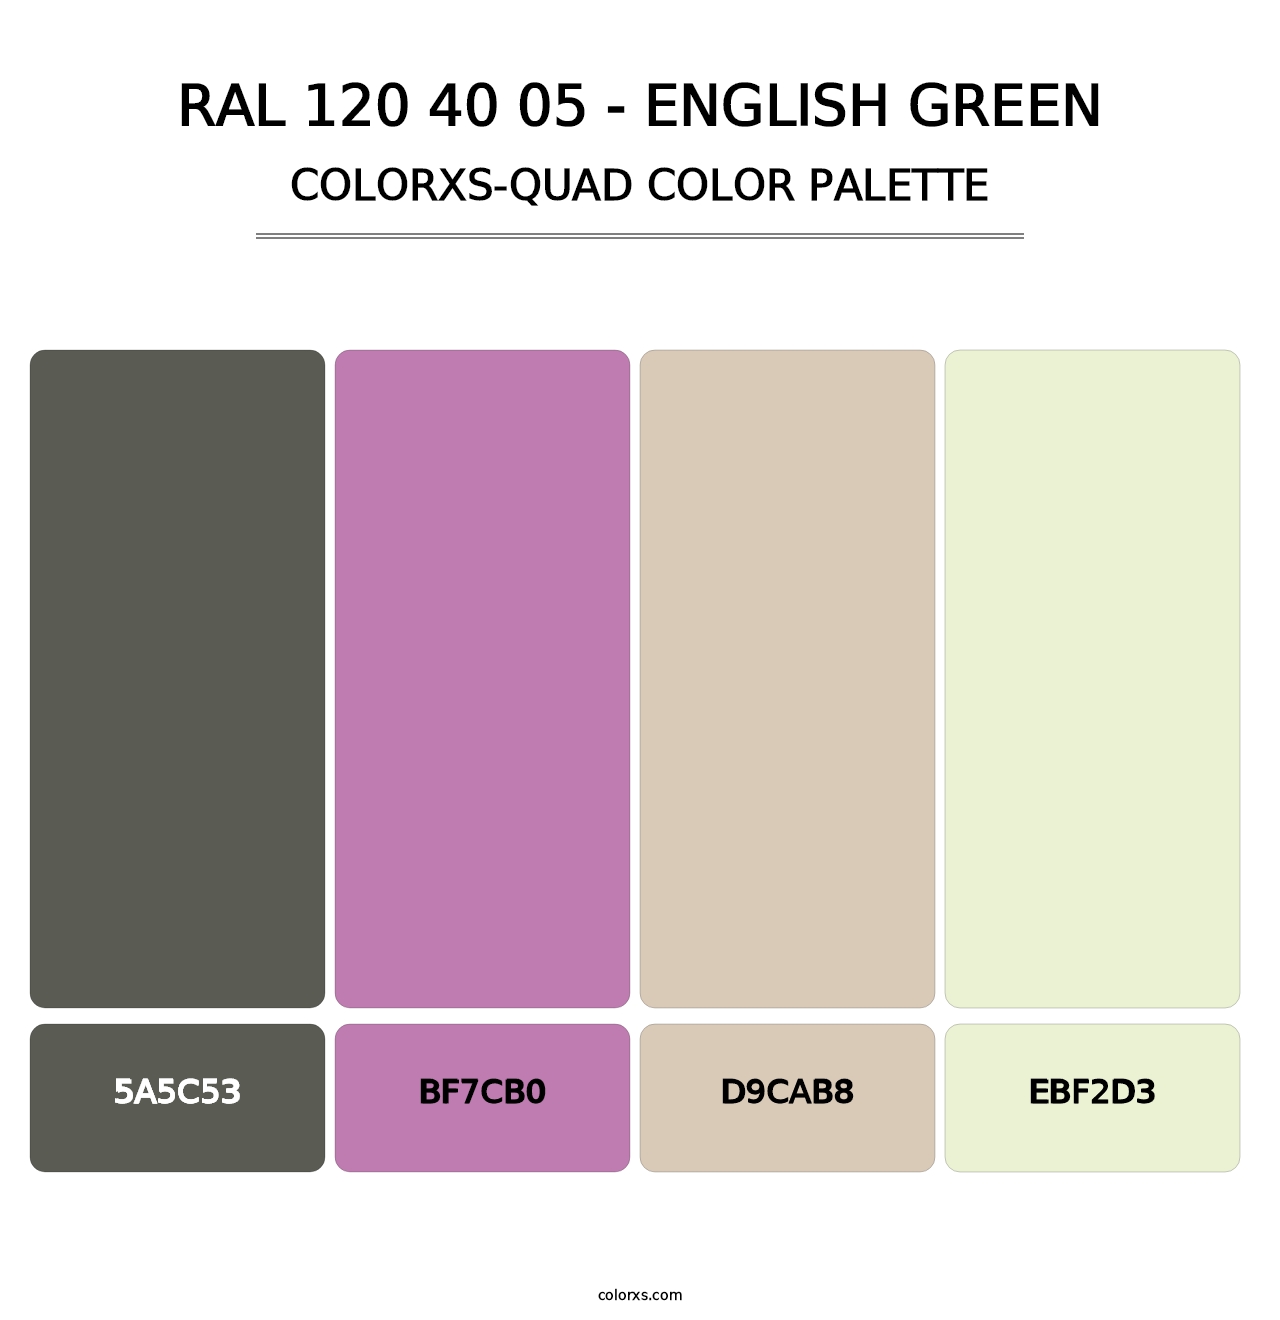 RAL 120 40 05 - English Green - Colorxs Quad Palette